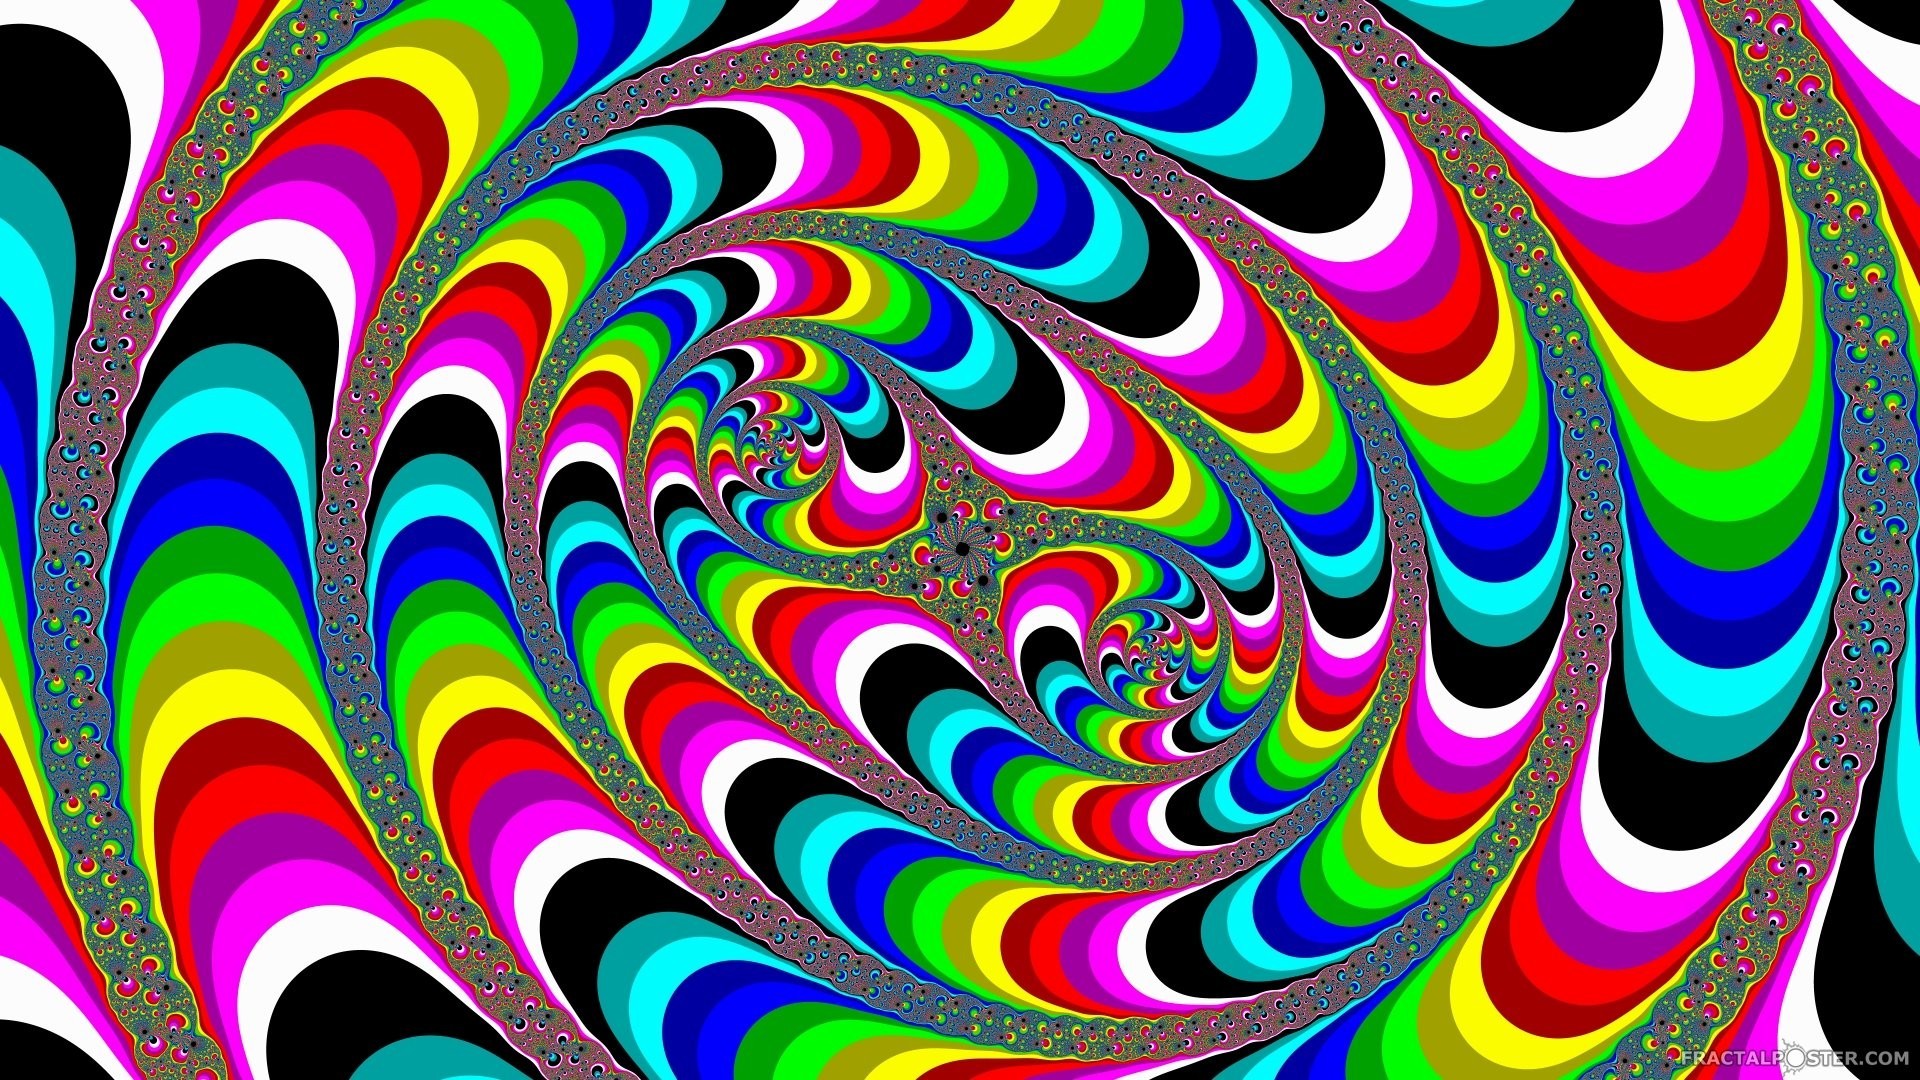 Trippy Colorful Wallpaper HD 1920x1080